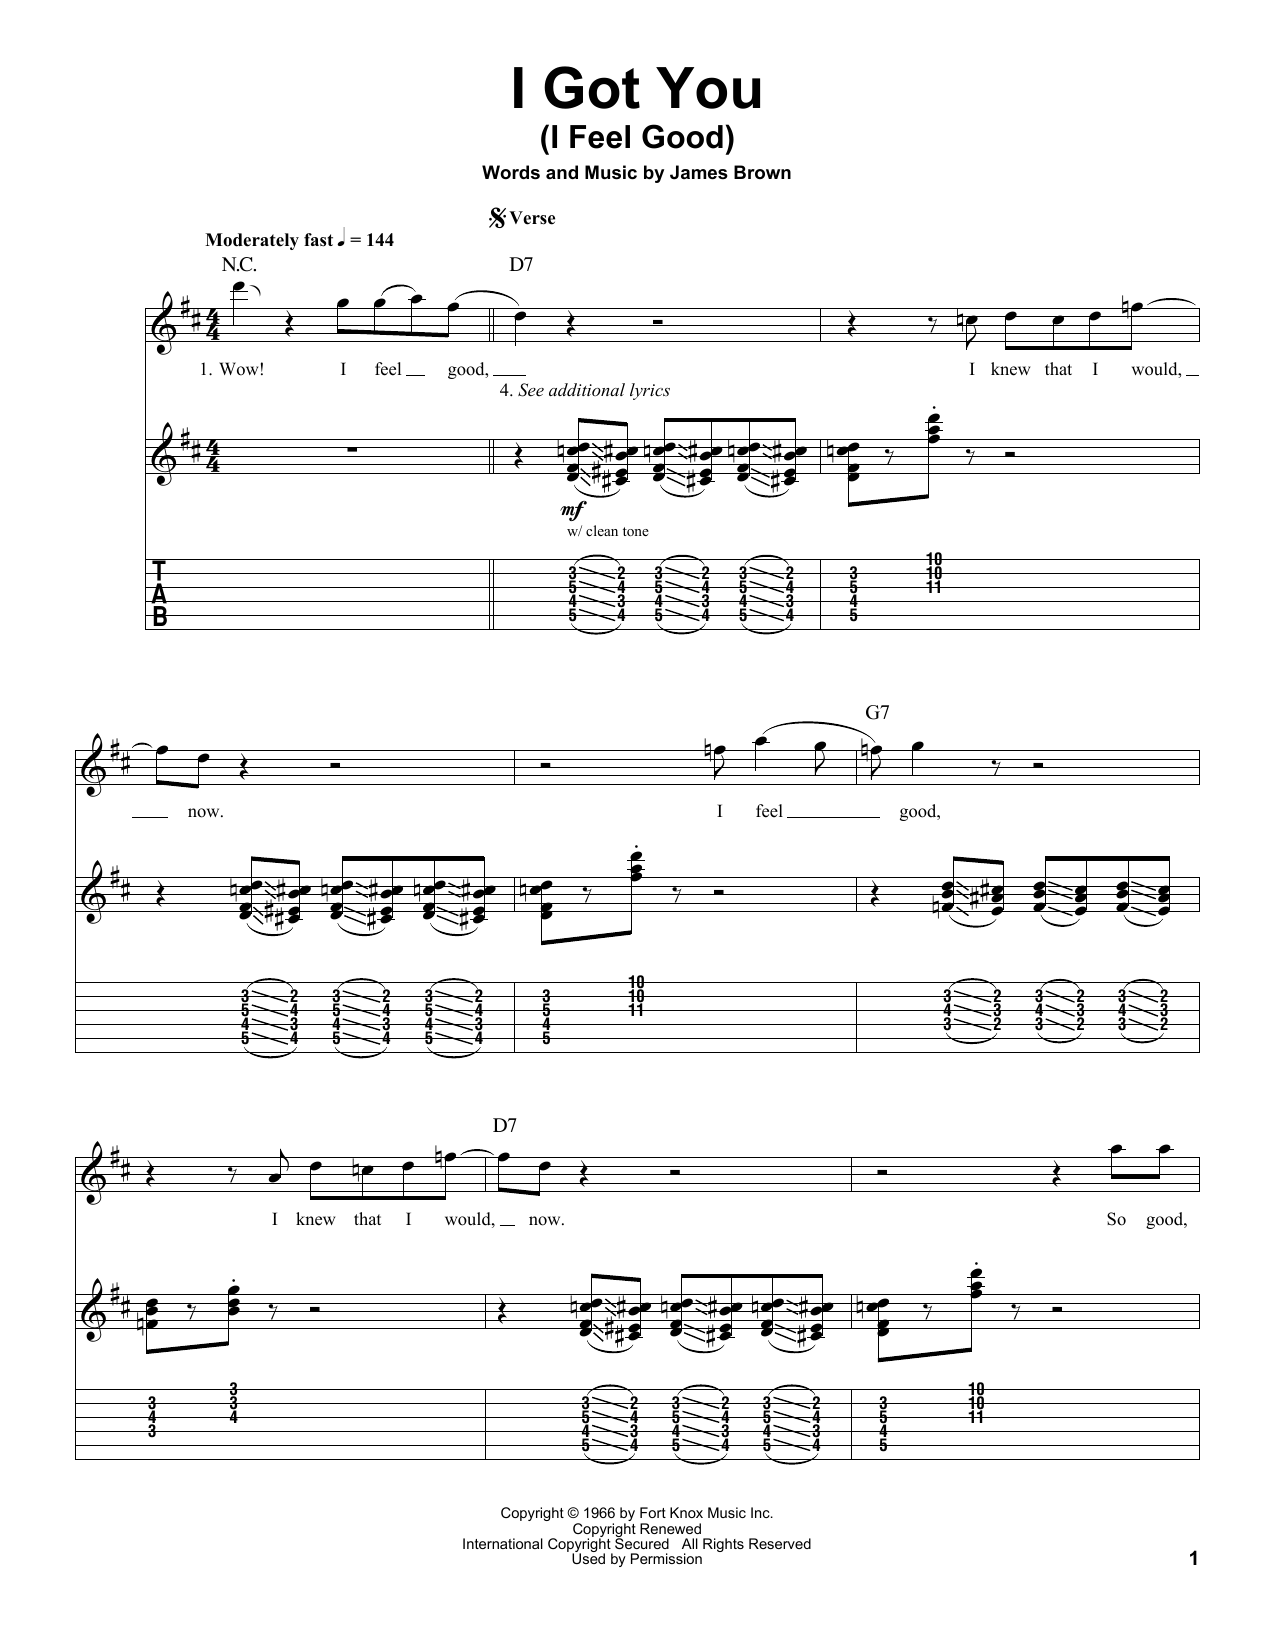 James Brown I Got You (I Feel Good) Sheet Music Notes & Chords for Flute - Download or Print PDF